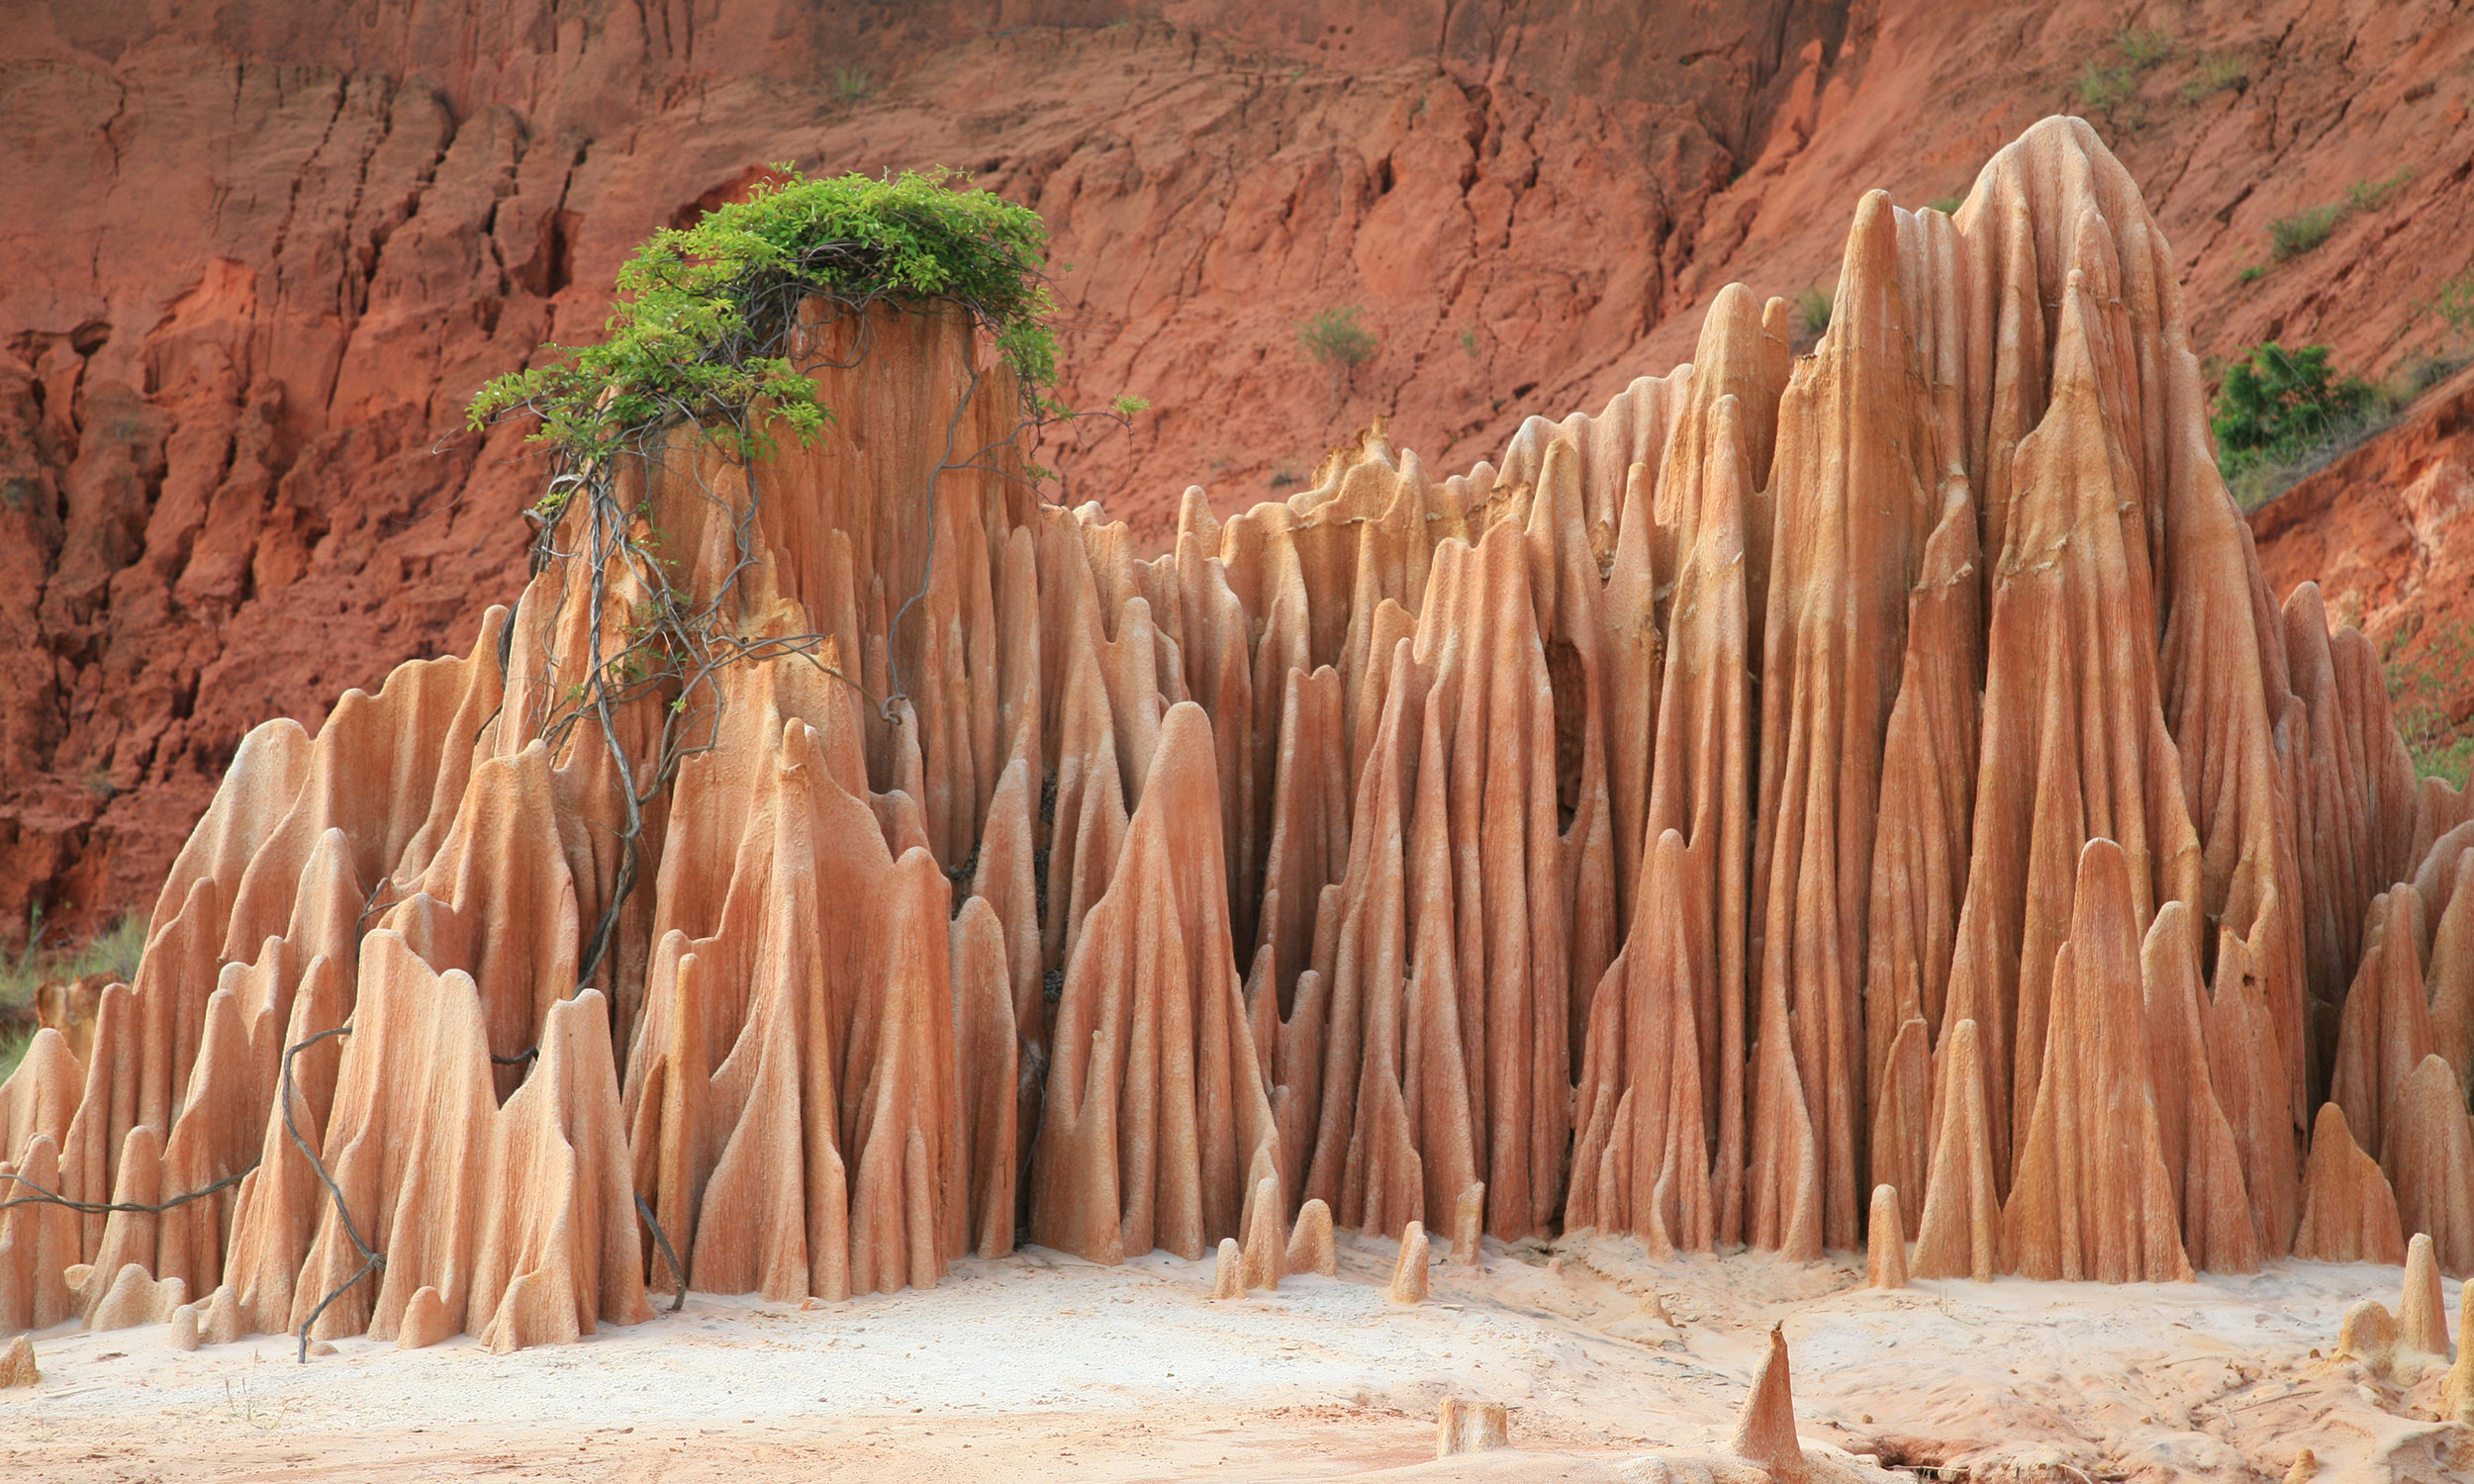 Les Tsingy rouges de Madagascar, près d’Antsiranana